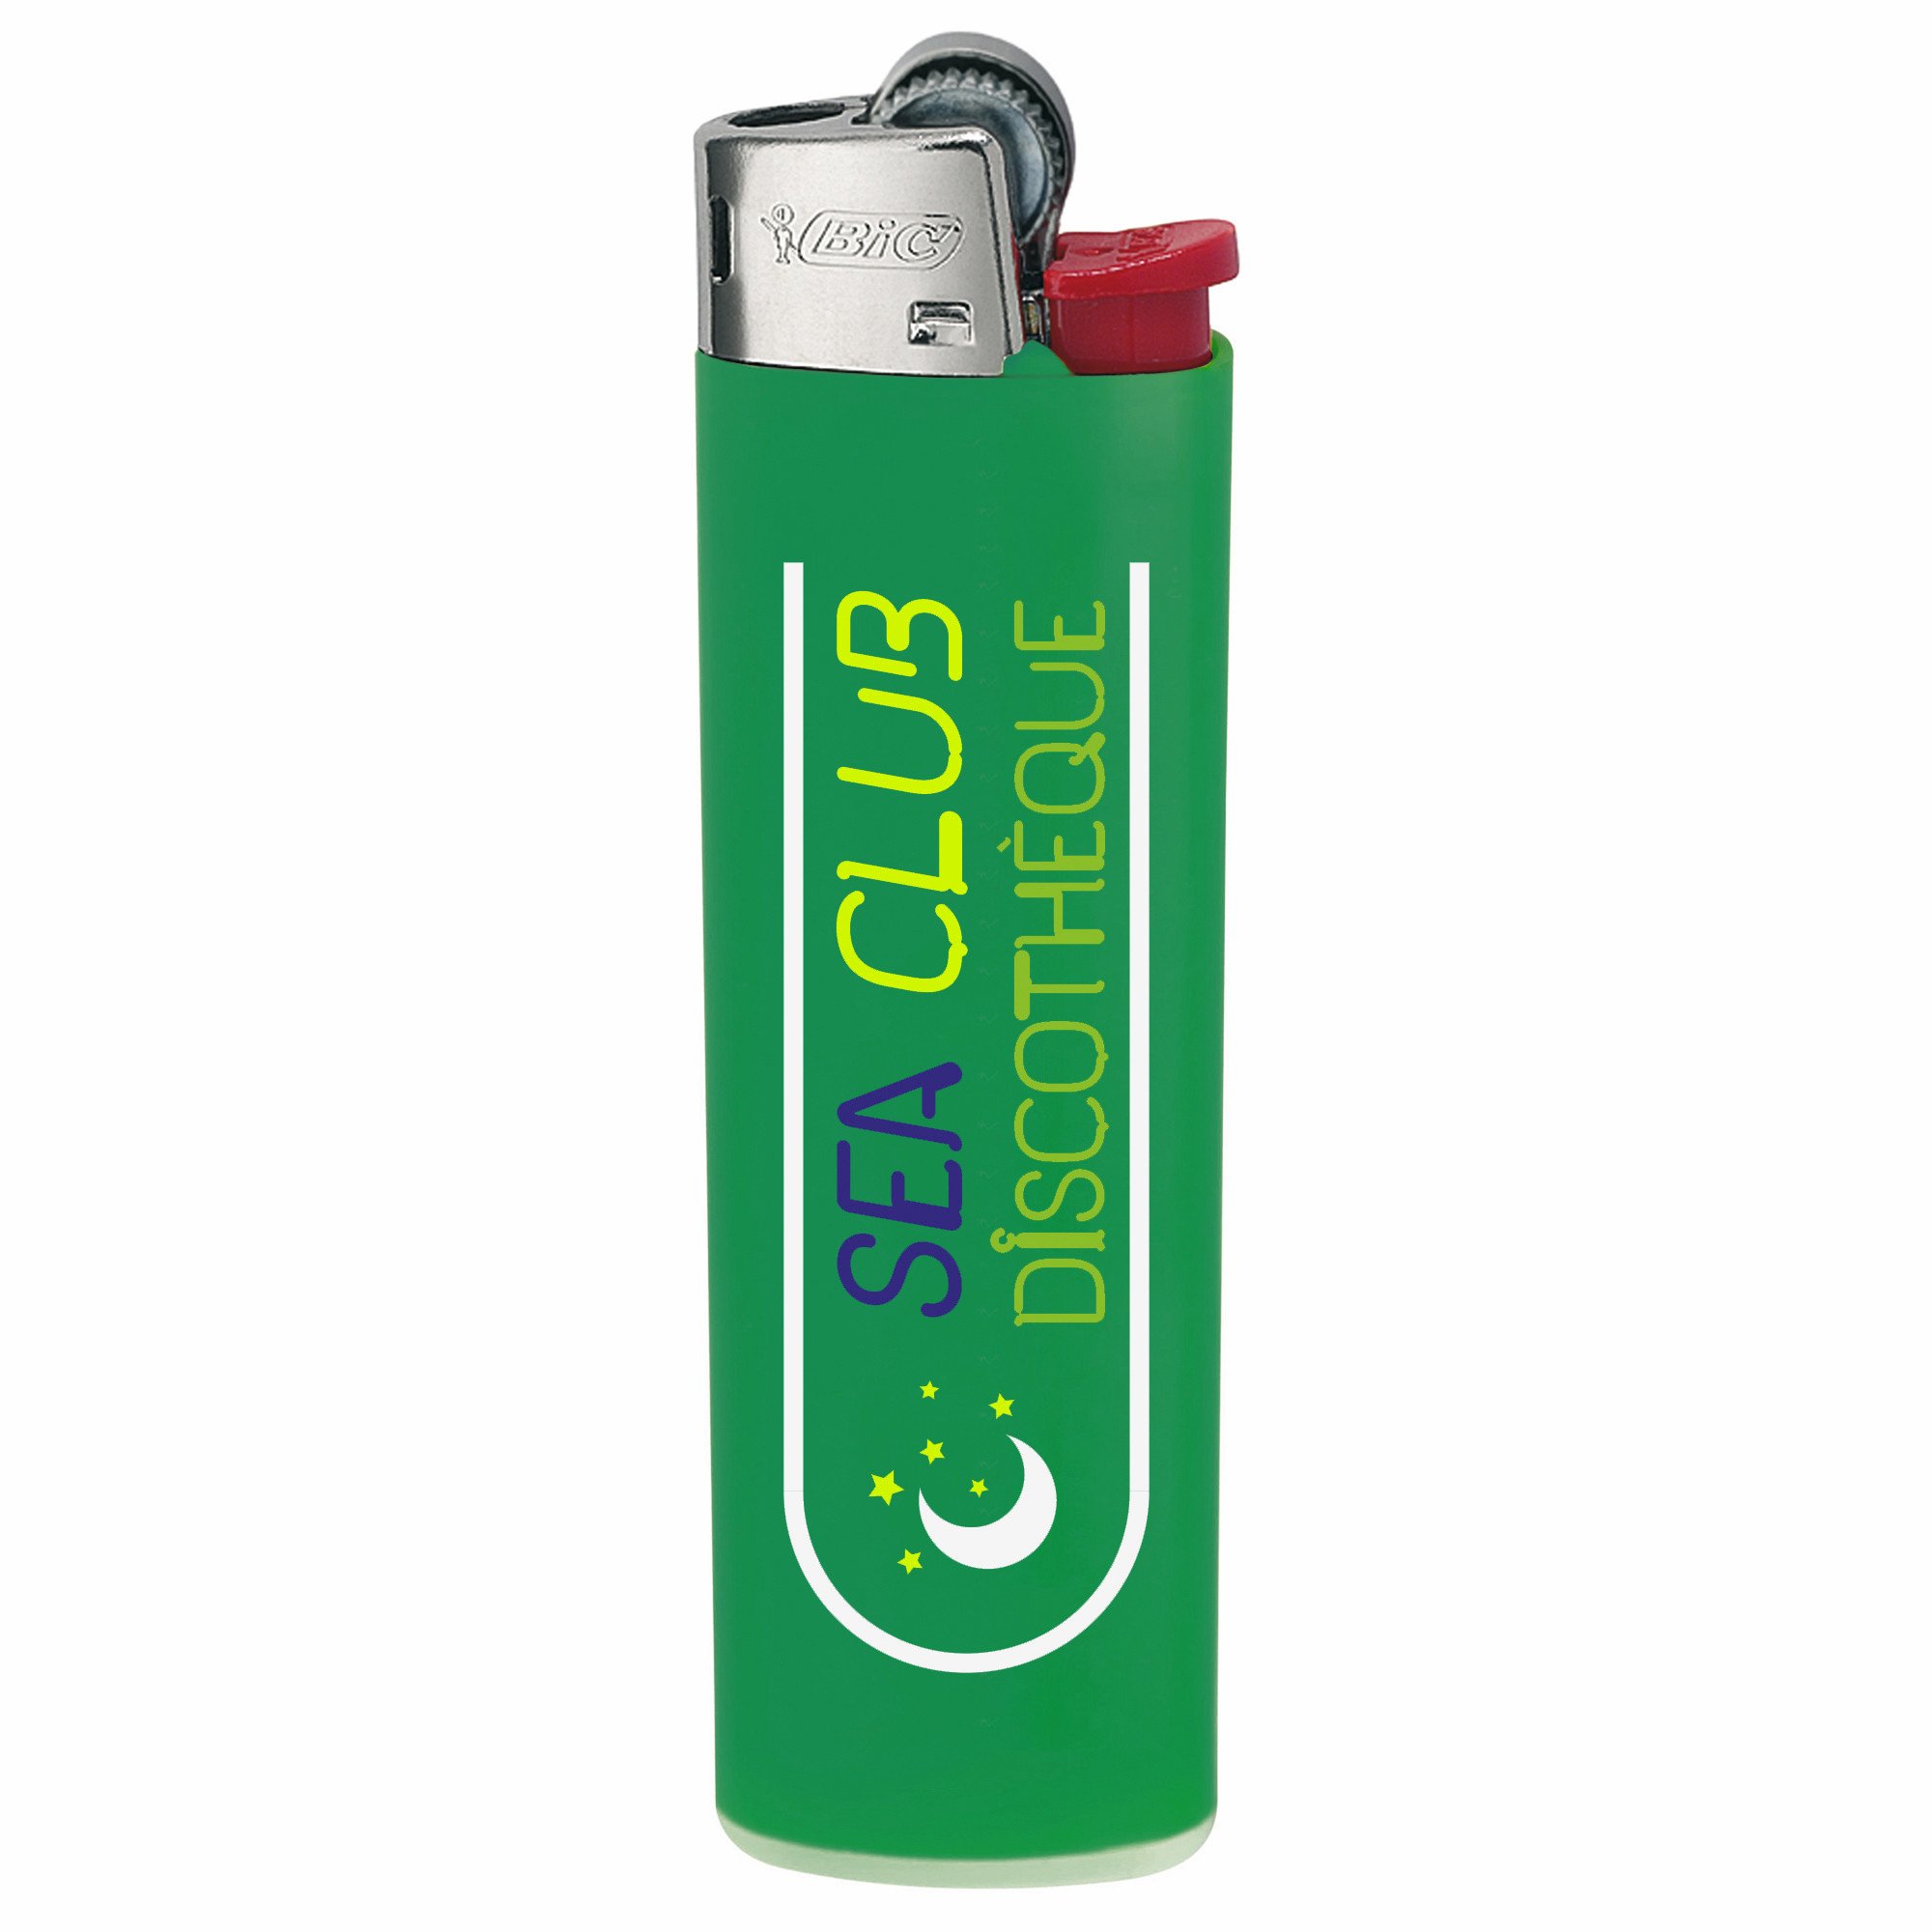 Custom BIC Lighters